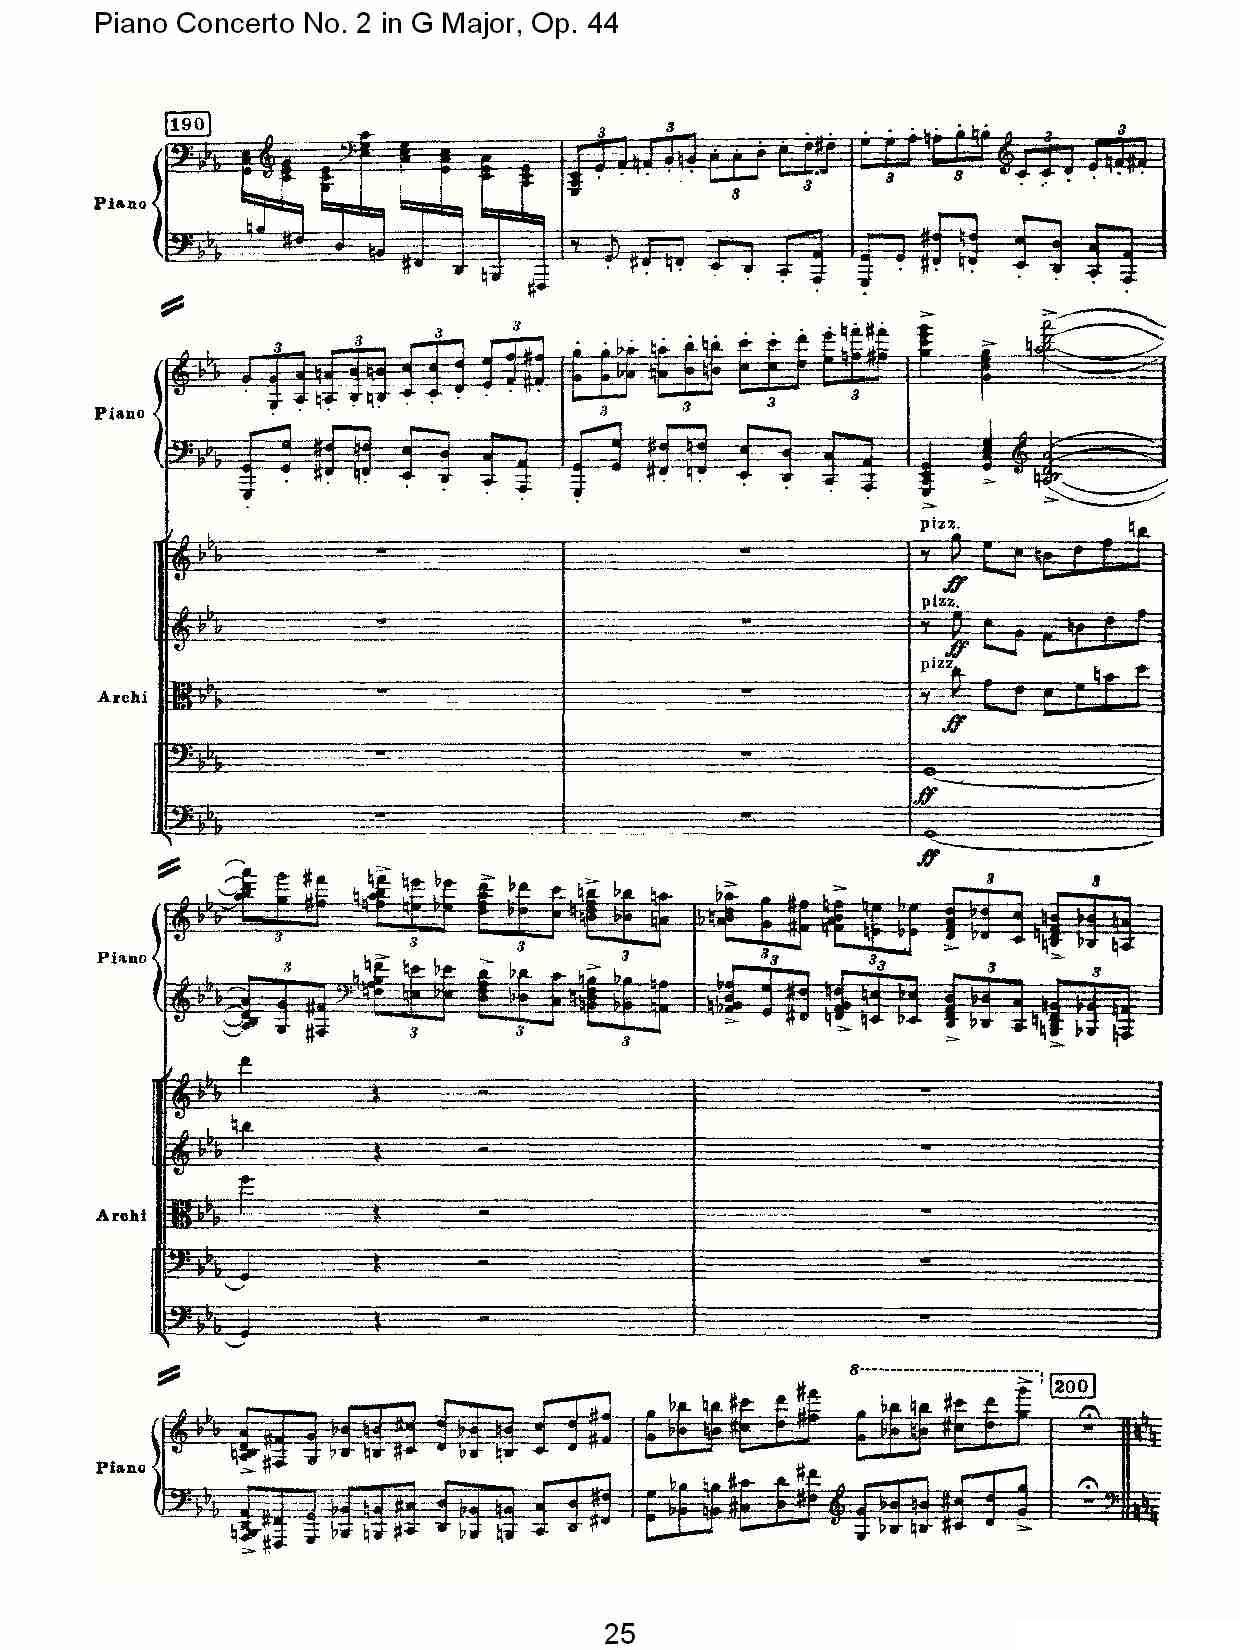 G大调第二钢琴协奏曲, Op.44第一乐章（一）钢琴曲谱（图25）